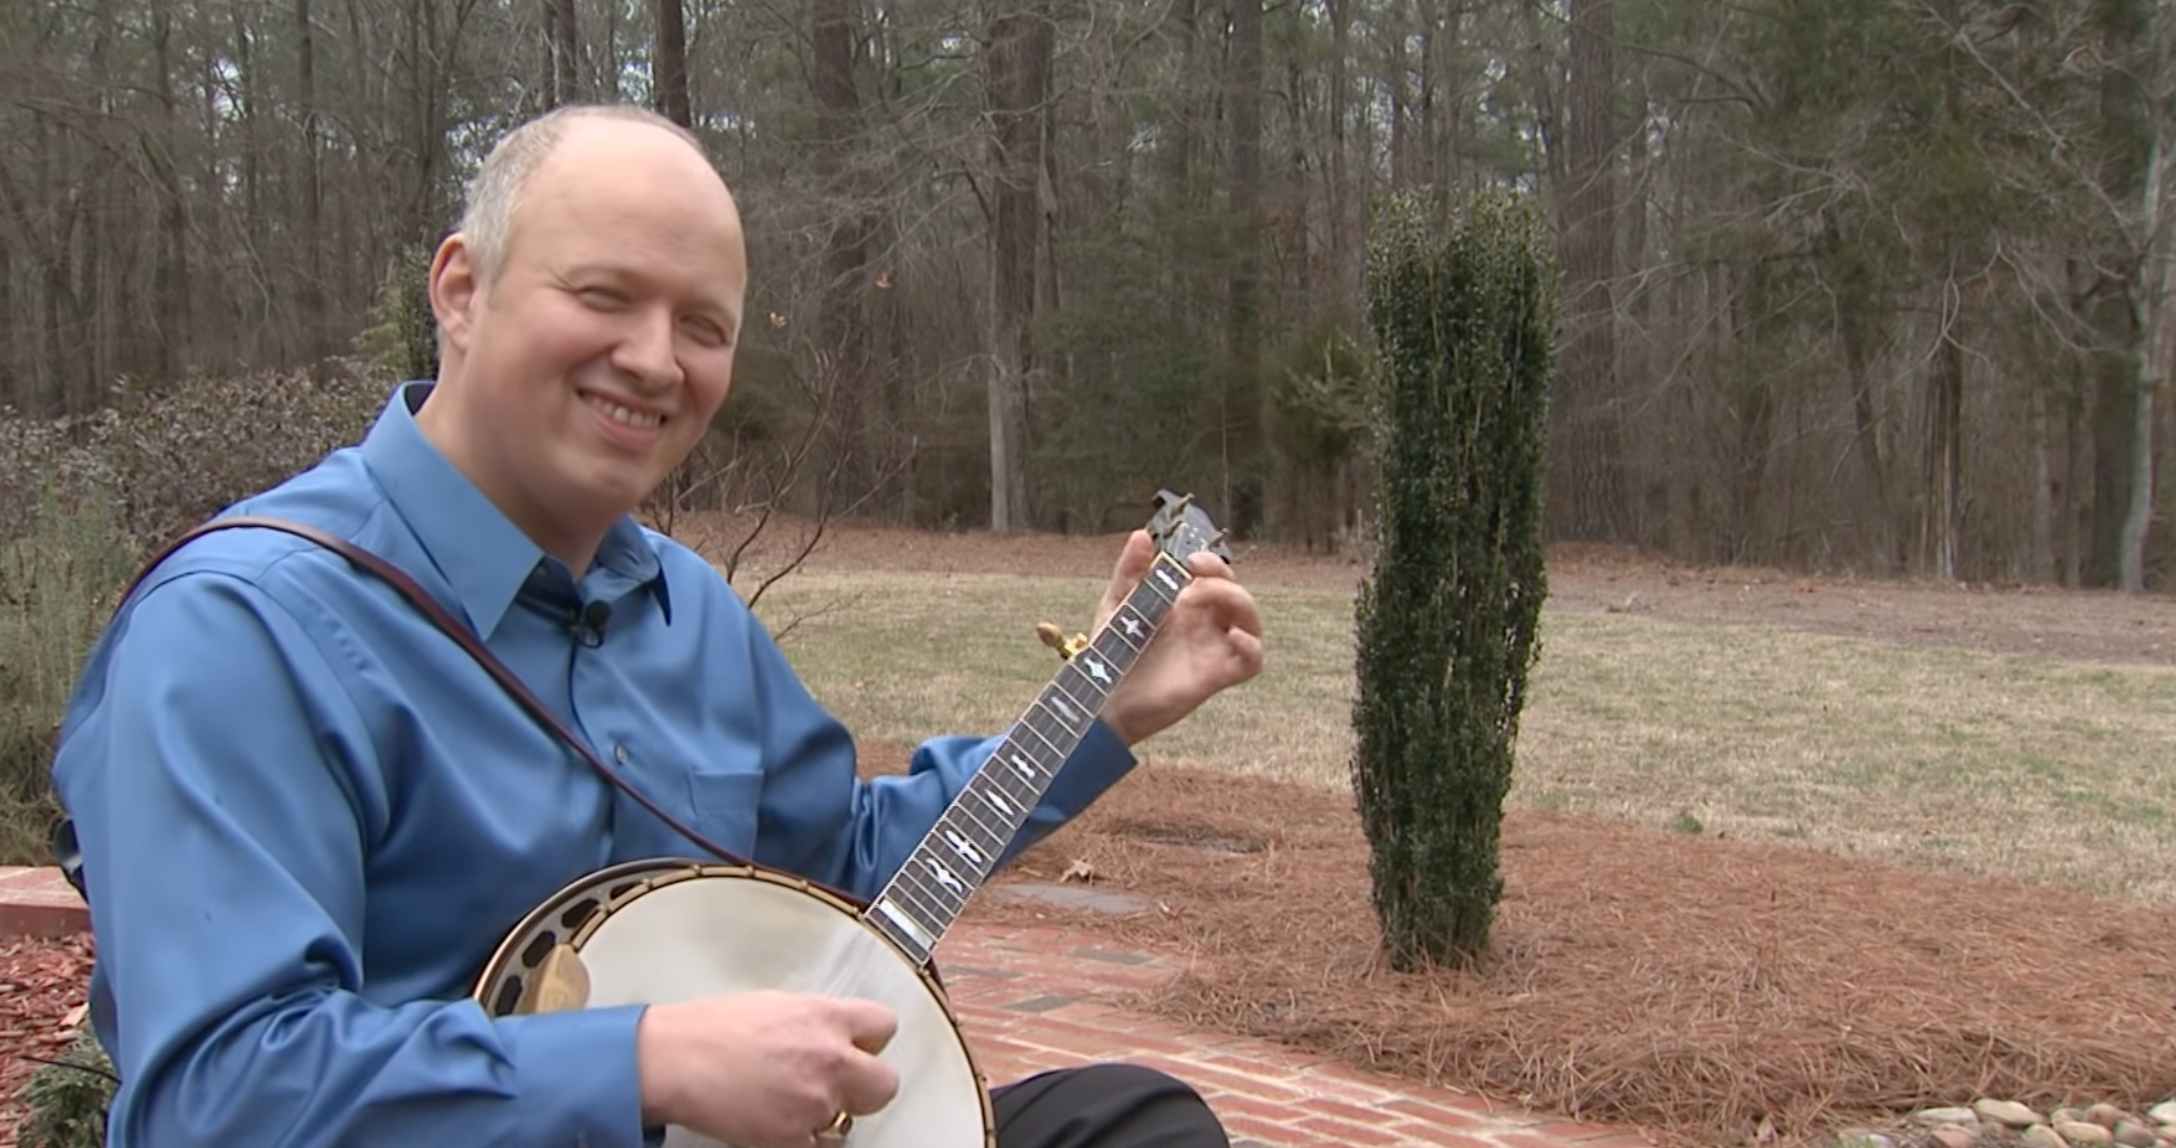 jim mills, renowned bluegrass musician, passes away at 57